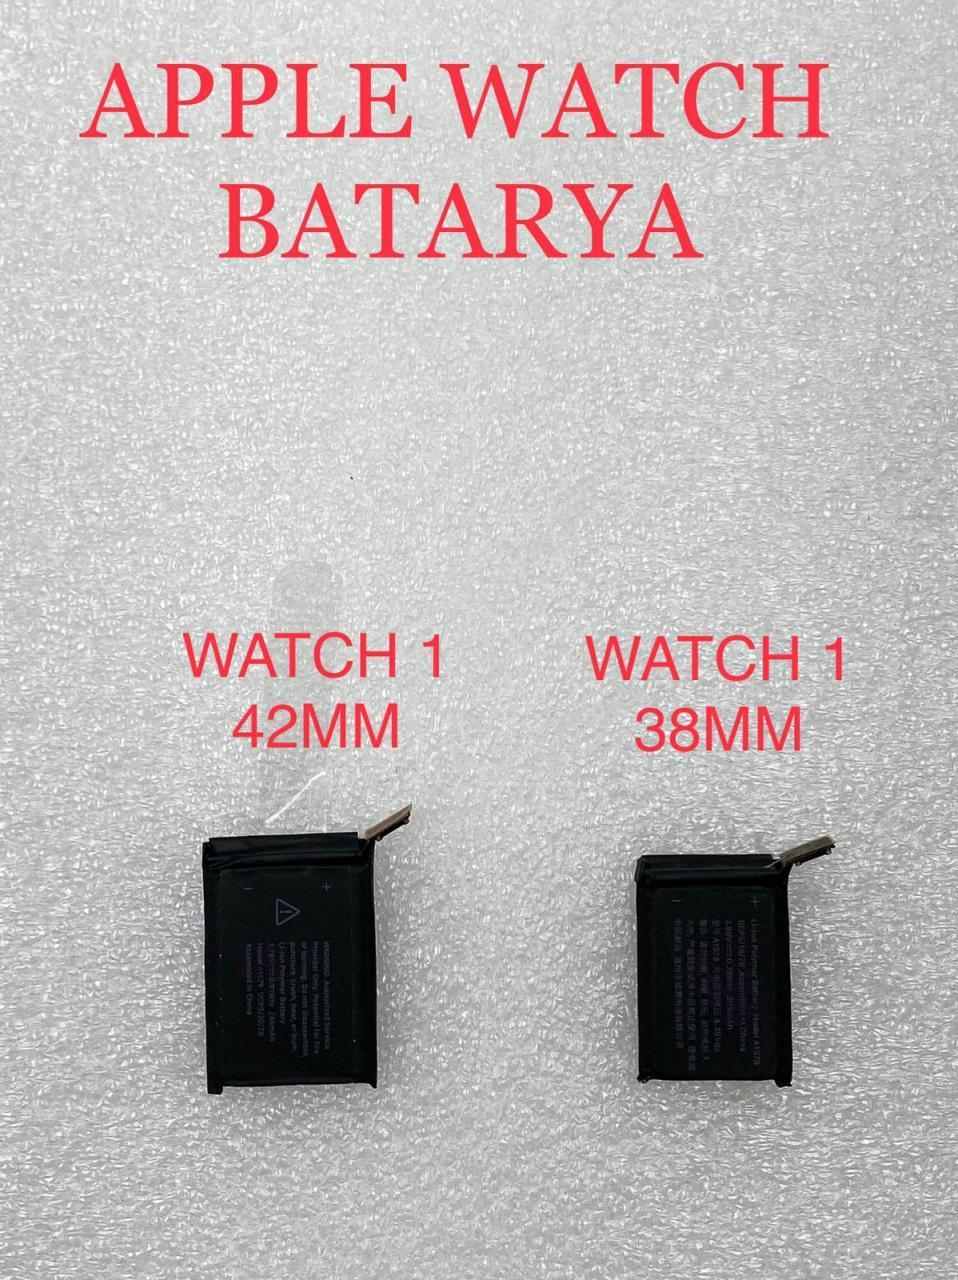 Watch S3 42Mm Gps Batarya